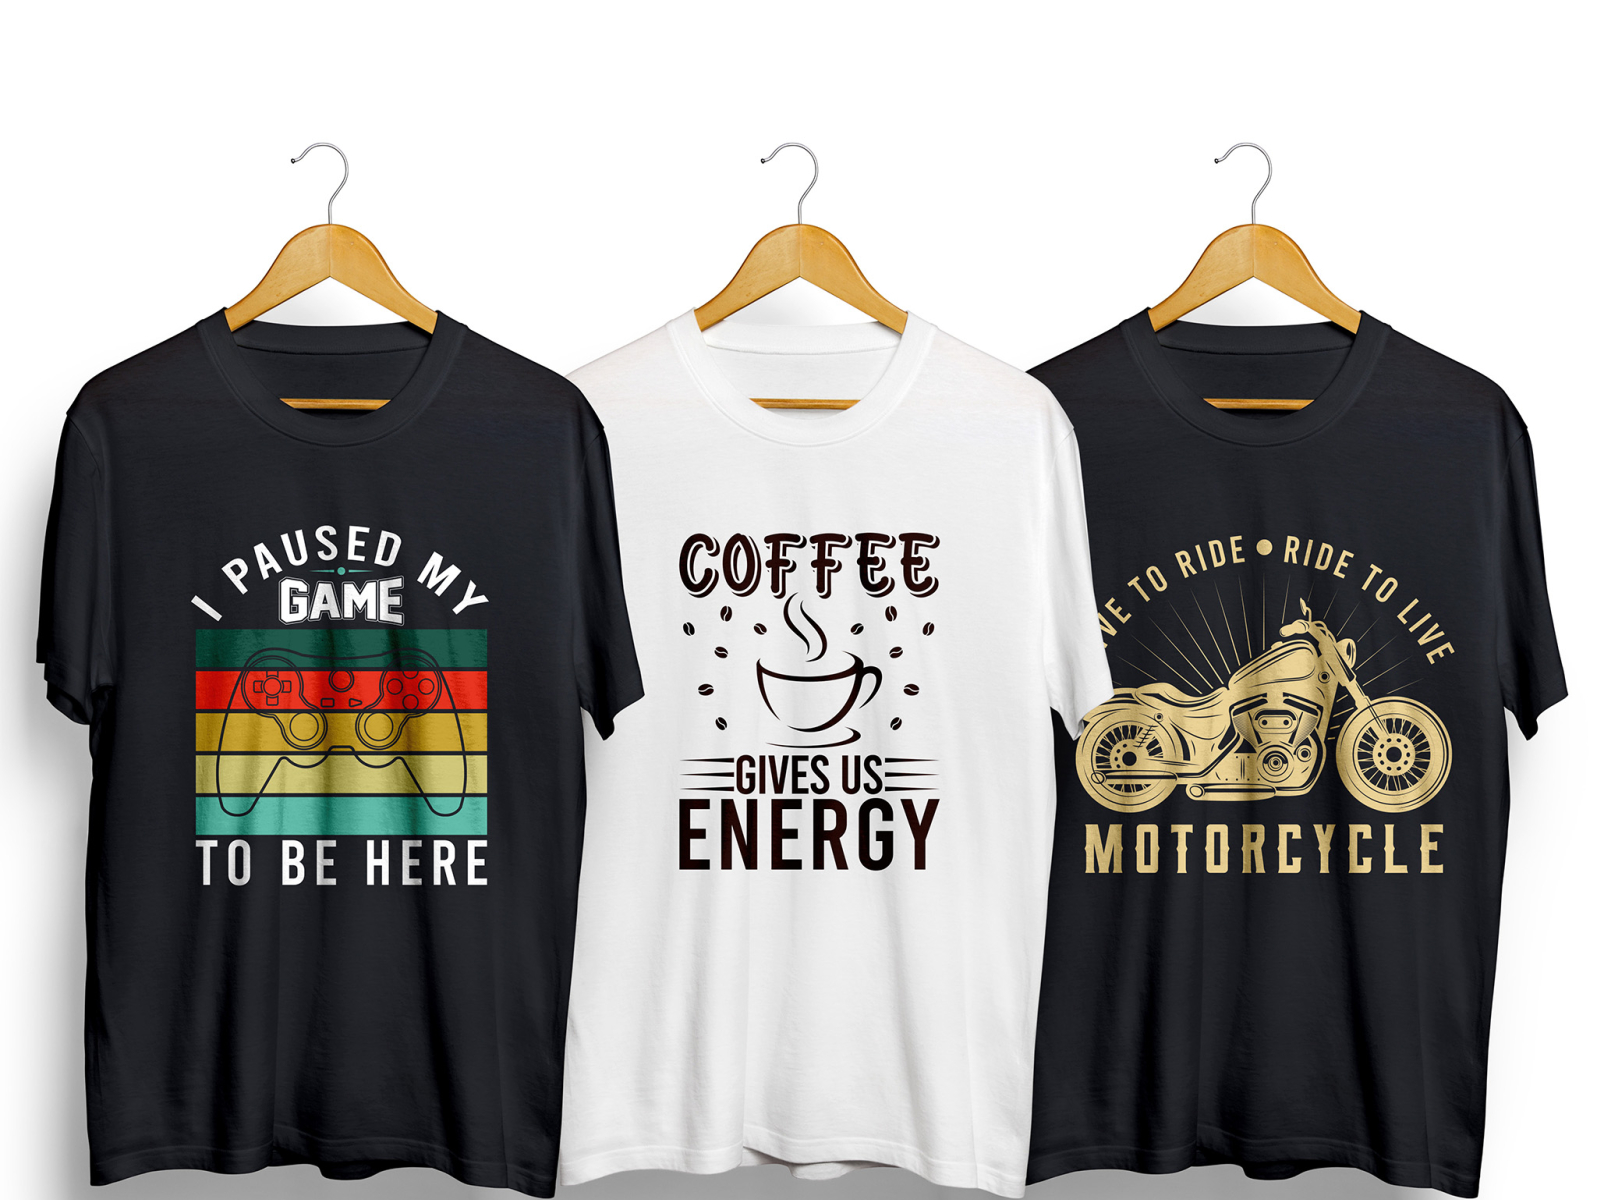 #Best_Custom_T_Shirt_Designs by Graphic Ehub on Dribbble